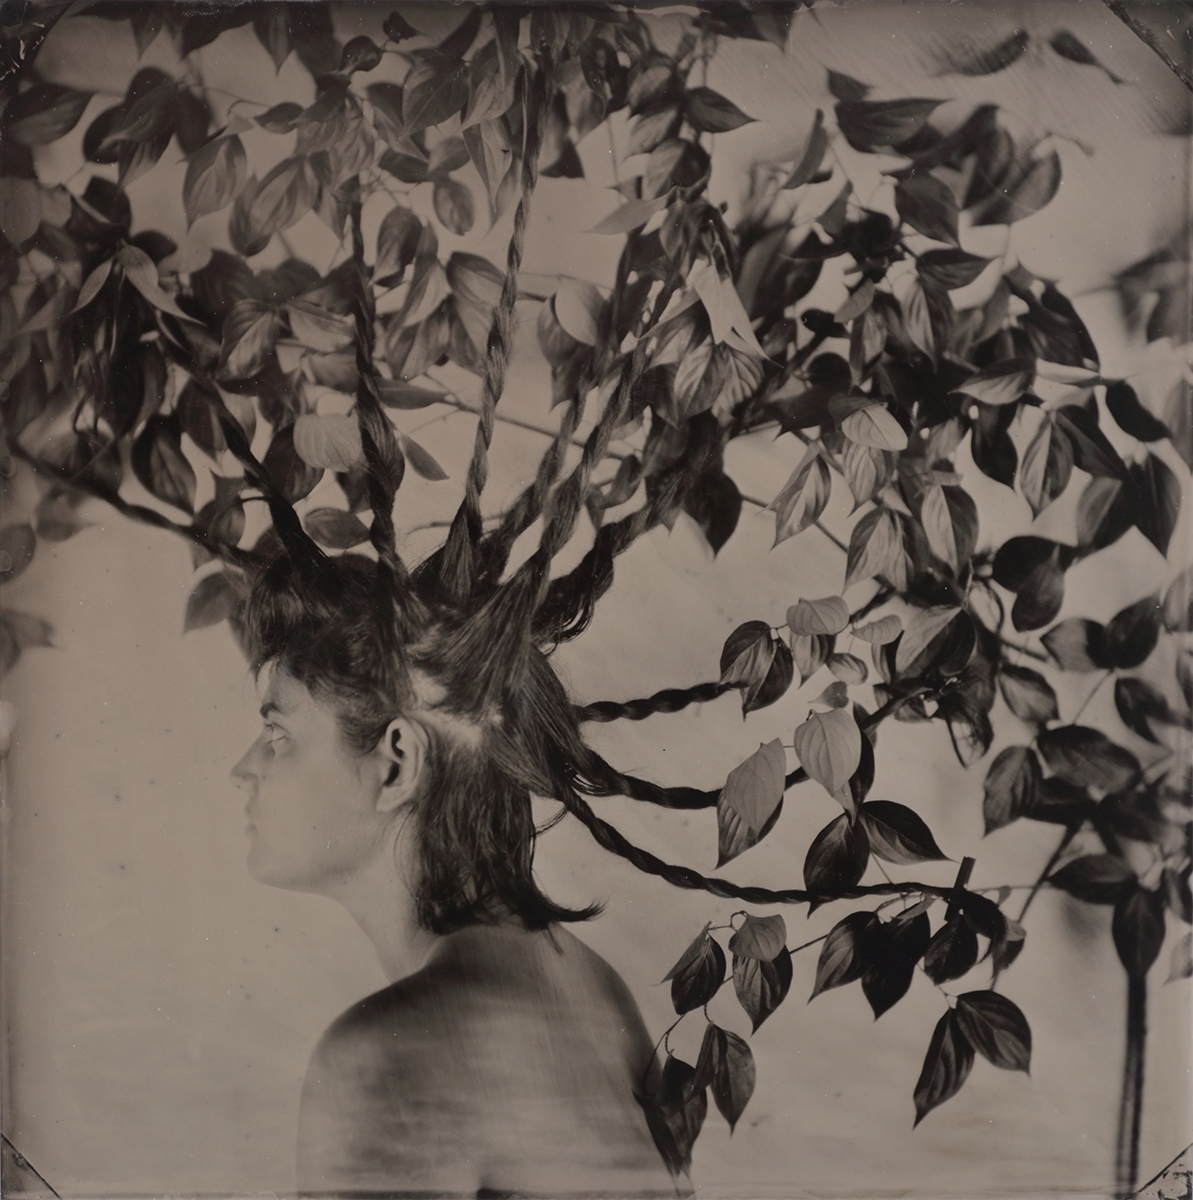 Brattleboro Museum : Rachel Portesi : Hair Portraits - The Eye of ...